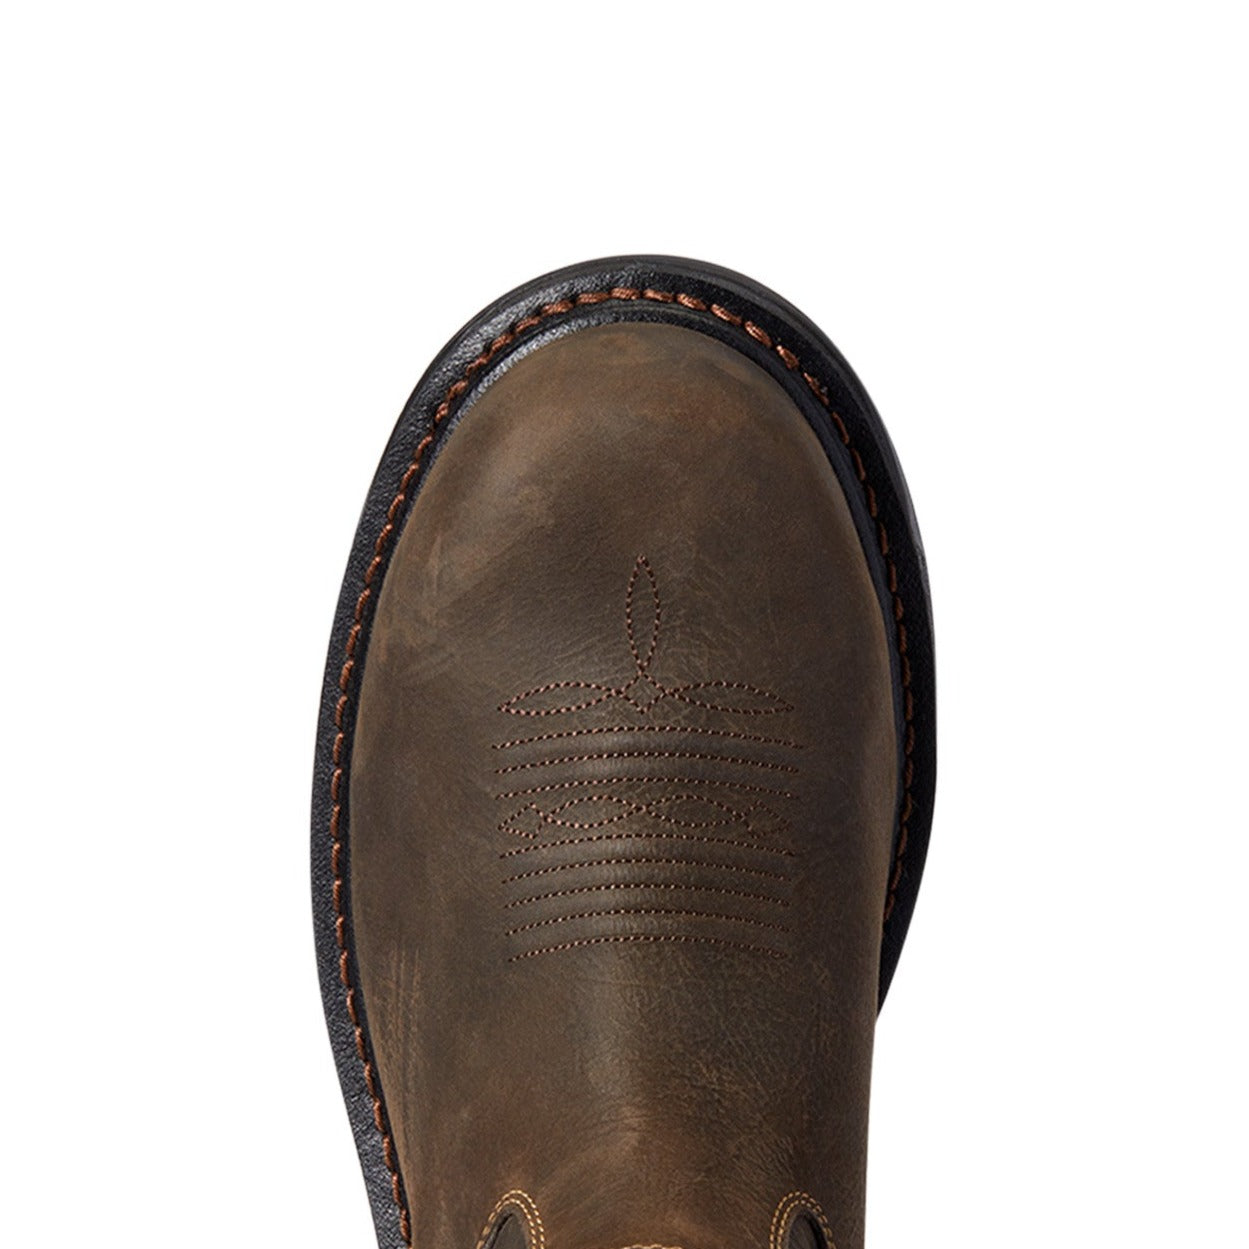 Ariat Men's Workhog XT Tumbleweed H2O Dark Brown Boot 10035911